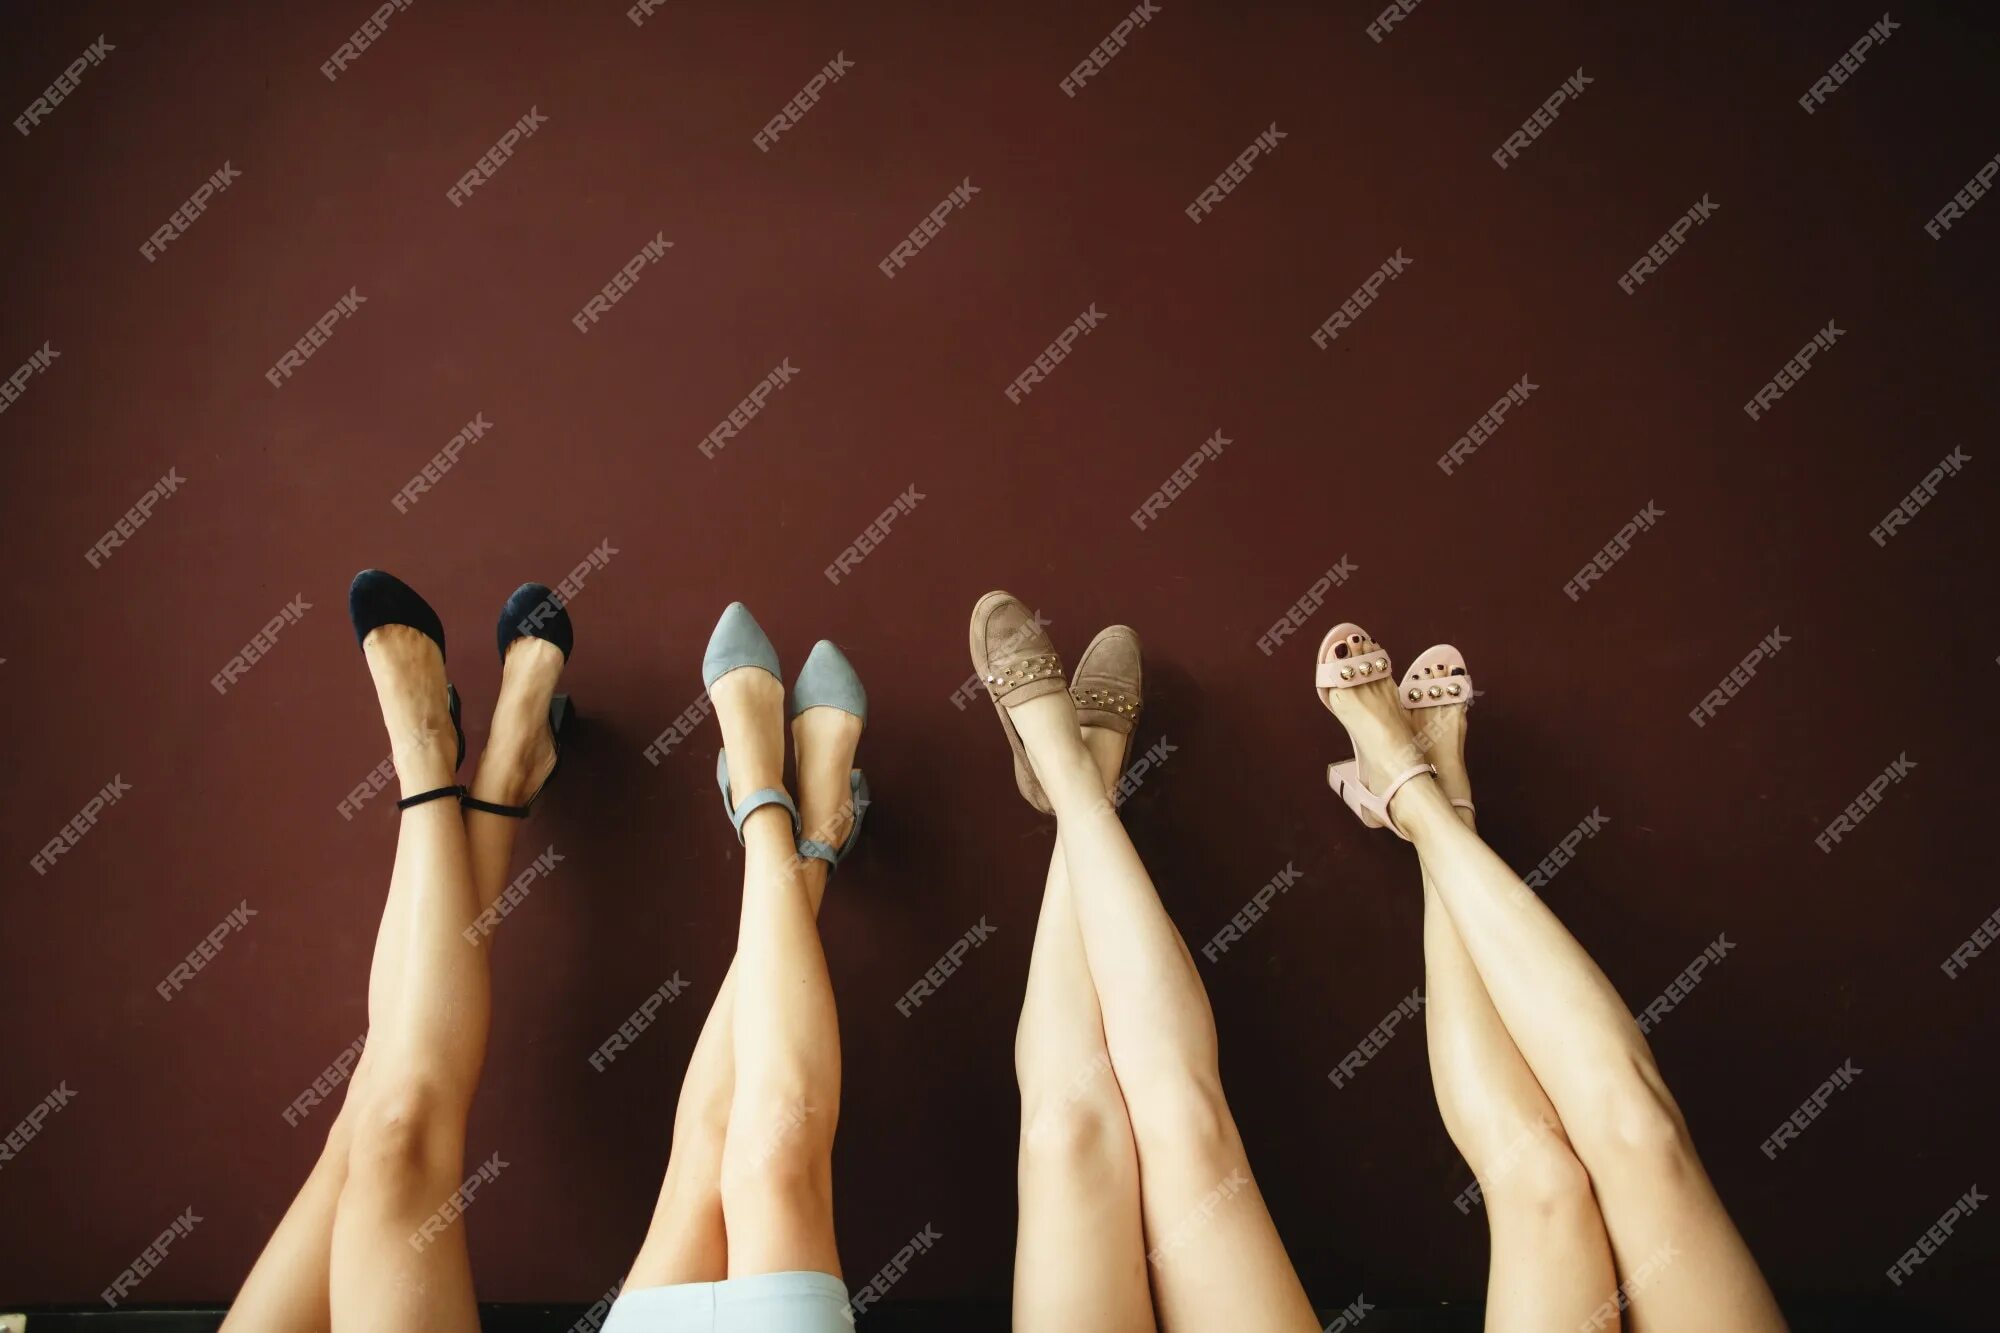 Три пары ног у. Много женских ног. Женские ножки вверх. Три пары ног. Много ног девушек.